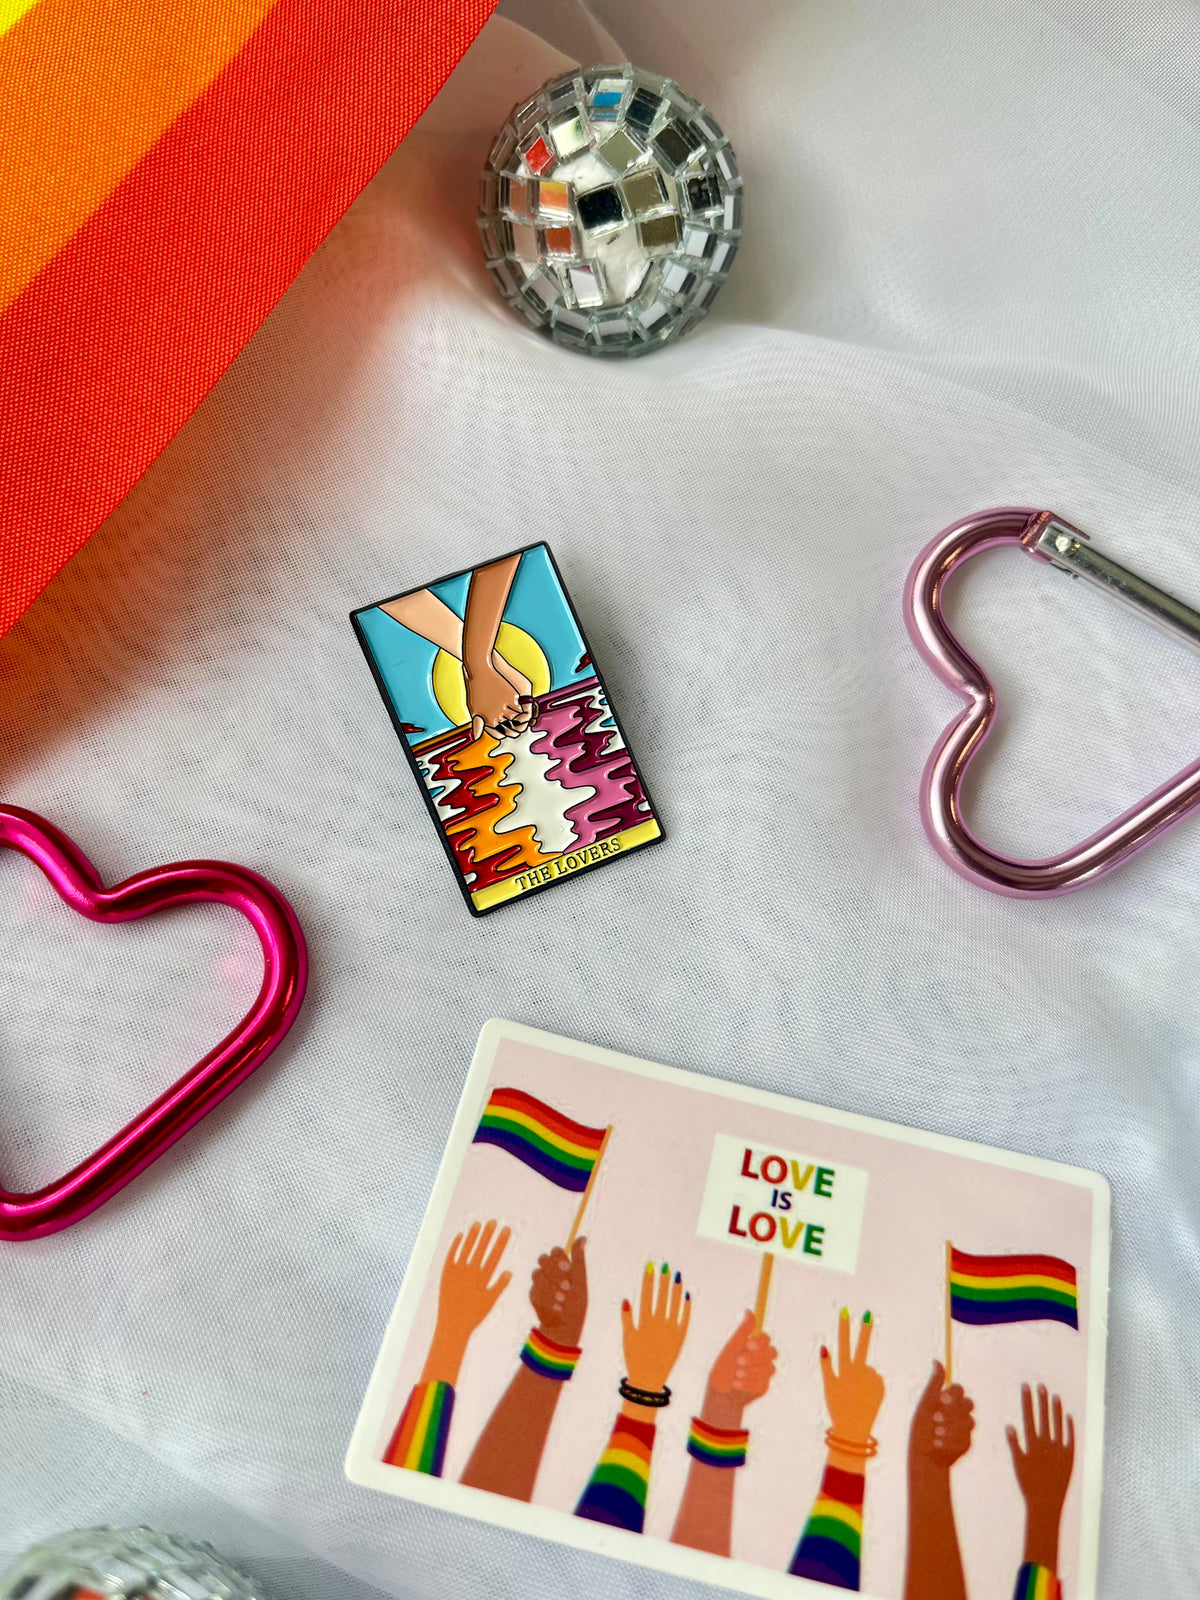 The Lovers Lesbian Tarot Pin